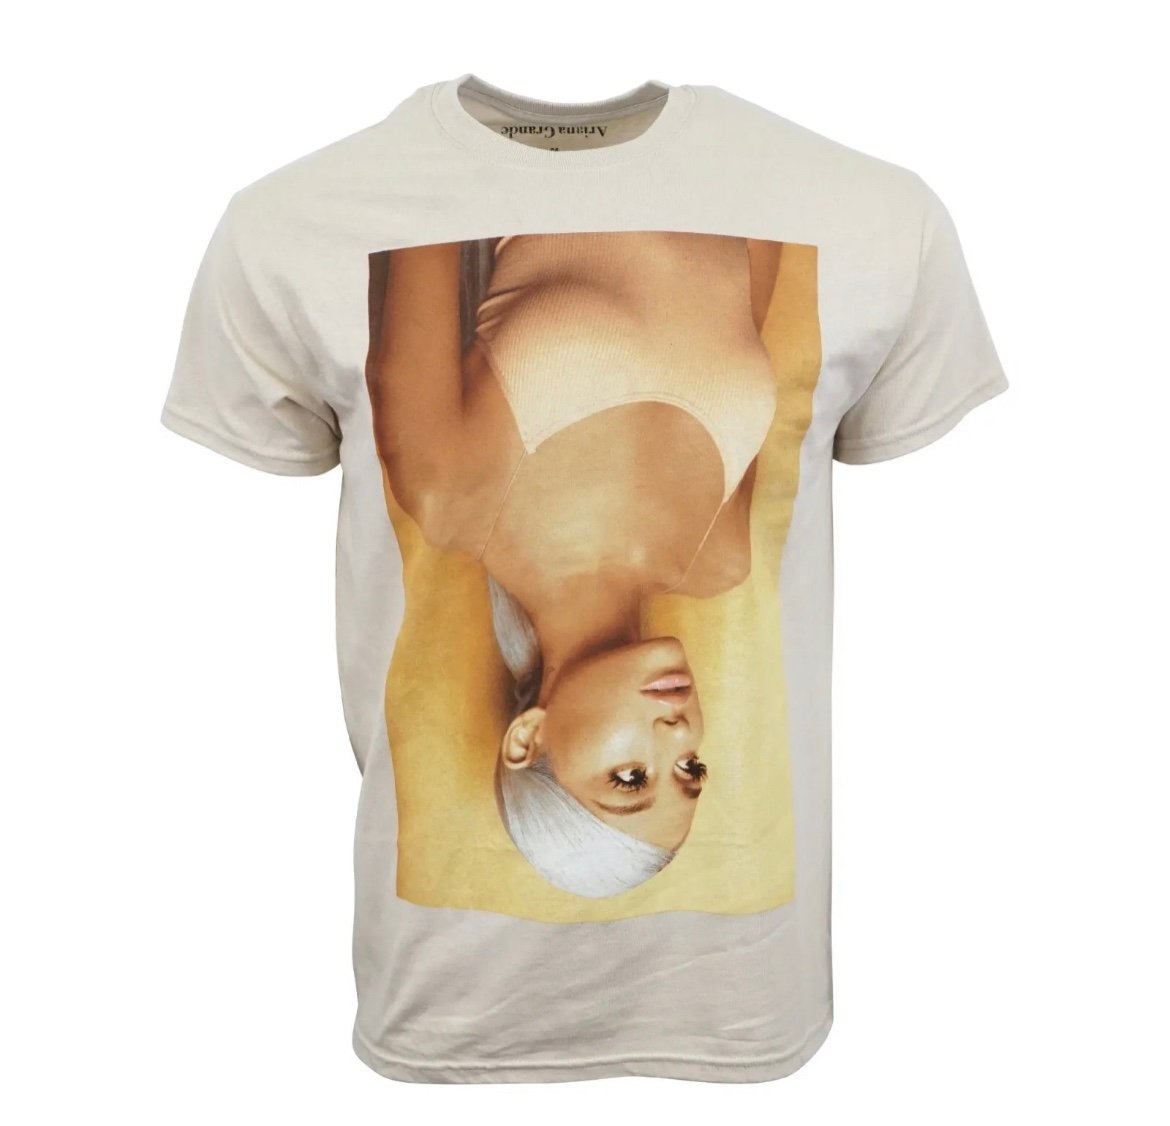 Great Ariana Grande Sweetener Album Pop Unisex T Tee Shirt Top NEW NWT GHpfpYsOr Great